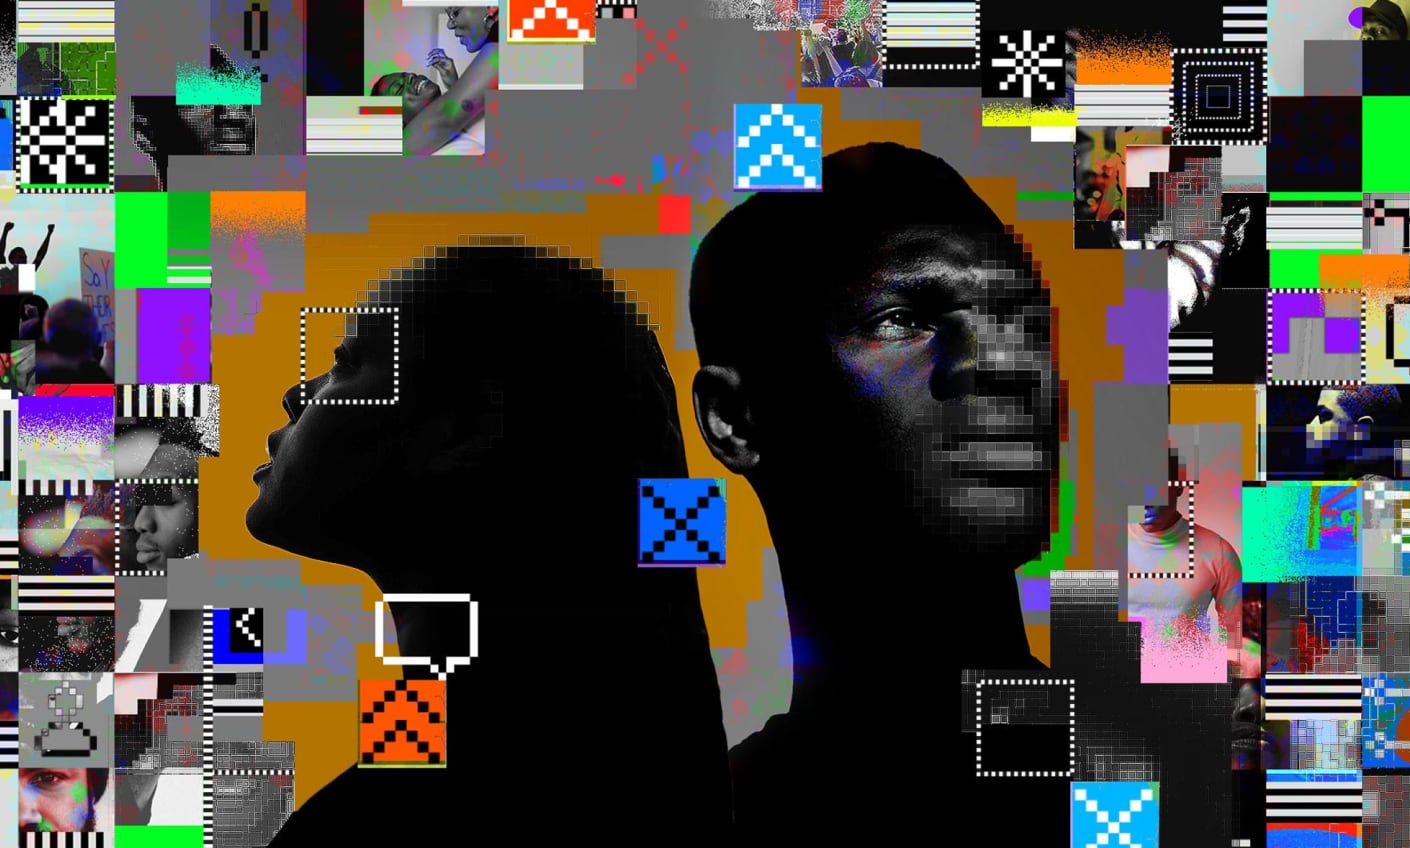 Glitch-inspired digital collage artwork centering Black individuals, by artist Chris Burnett